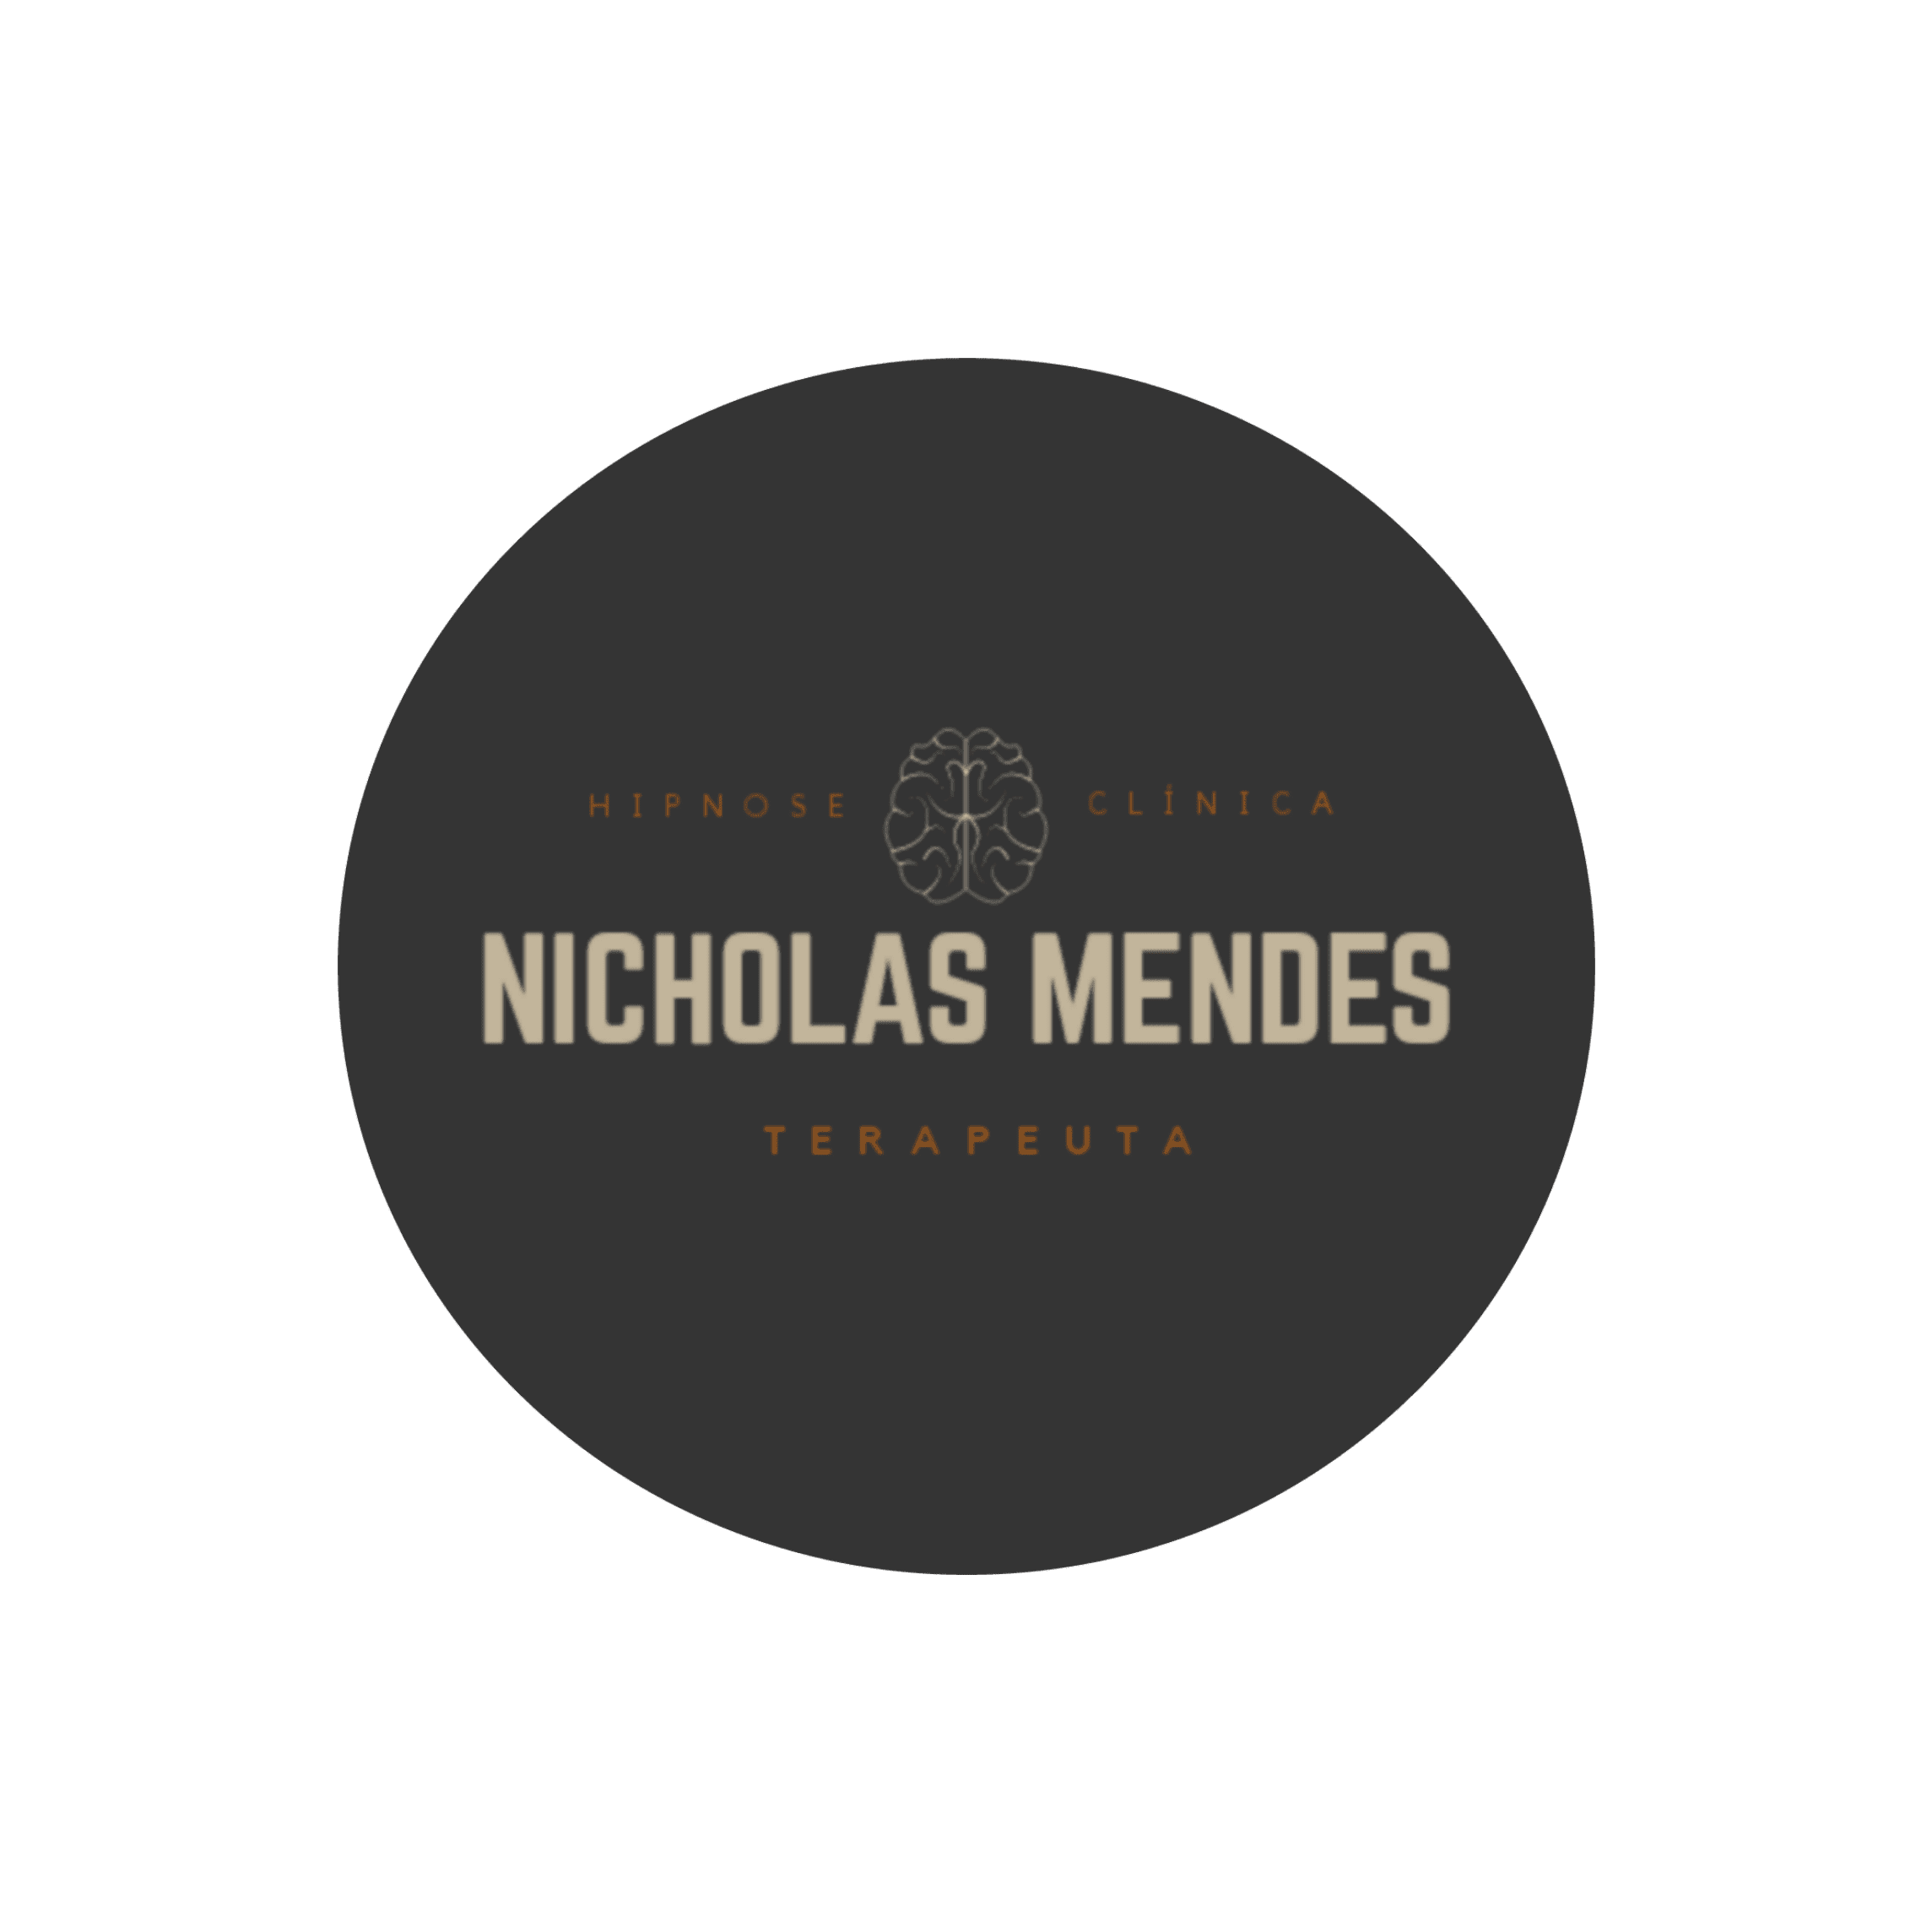 Nicholas Mendes - Hipnose Clínica